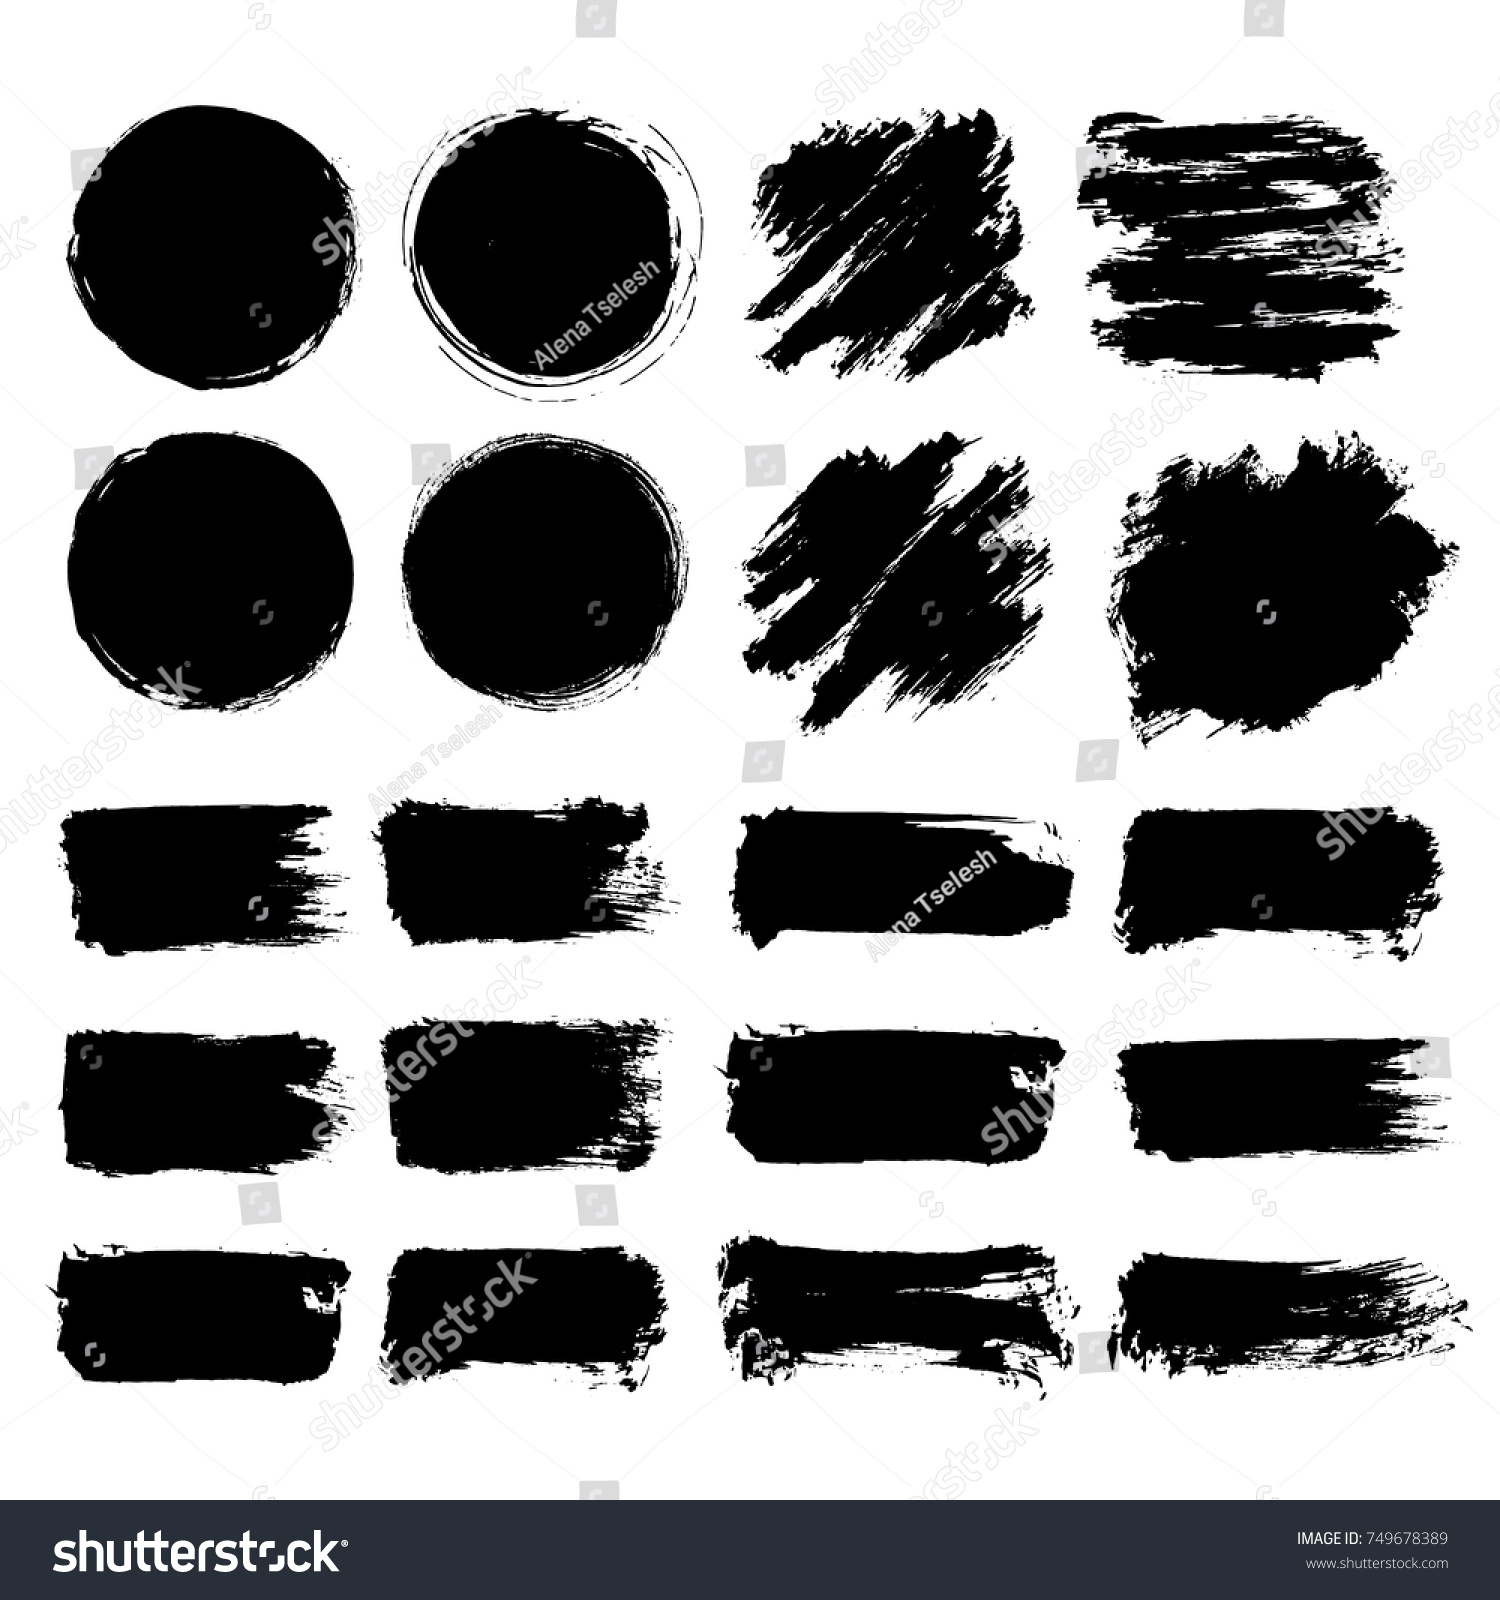 Black Friday set. Blots, banners, labels, backgrounds, brushes. Black Paint/ink texture. Vector illustration #749678389